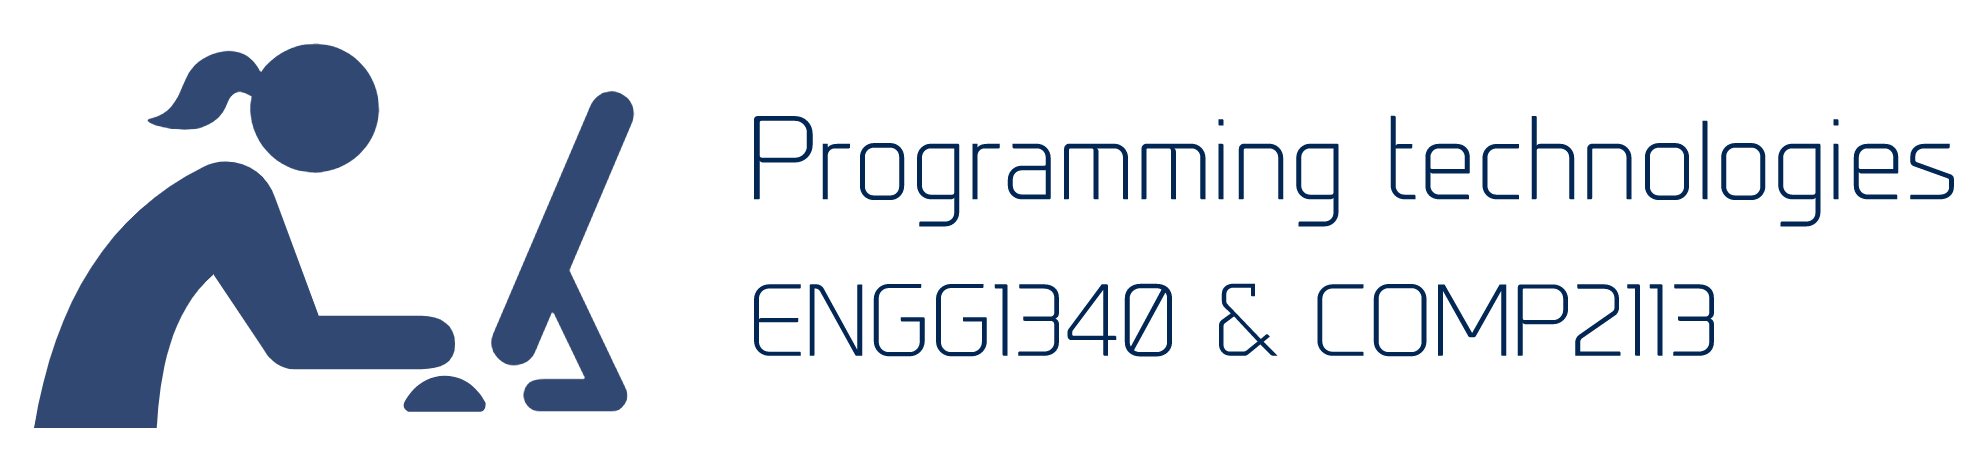 Programming technologies